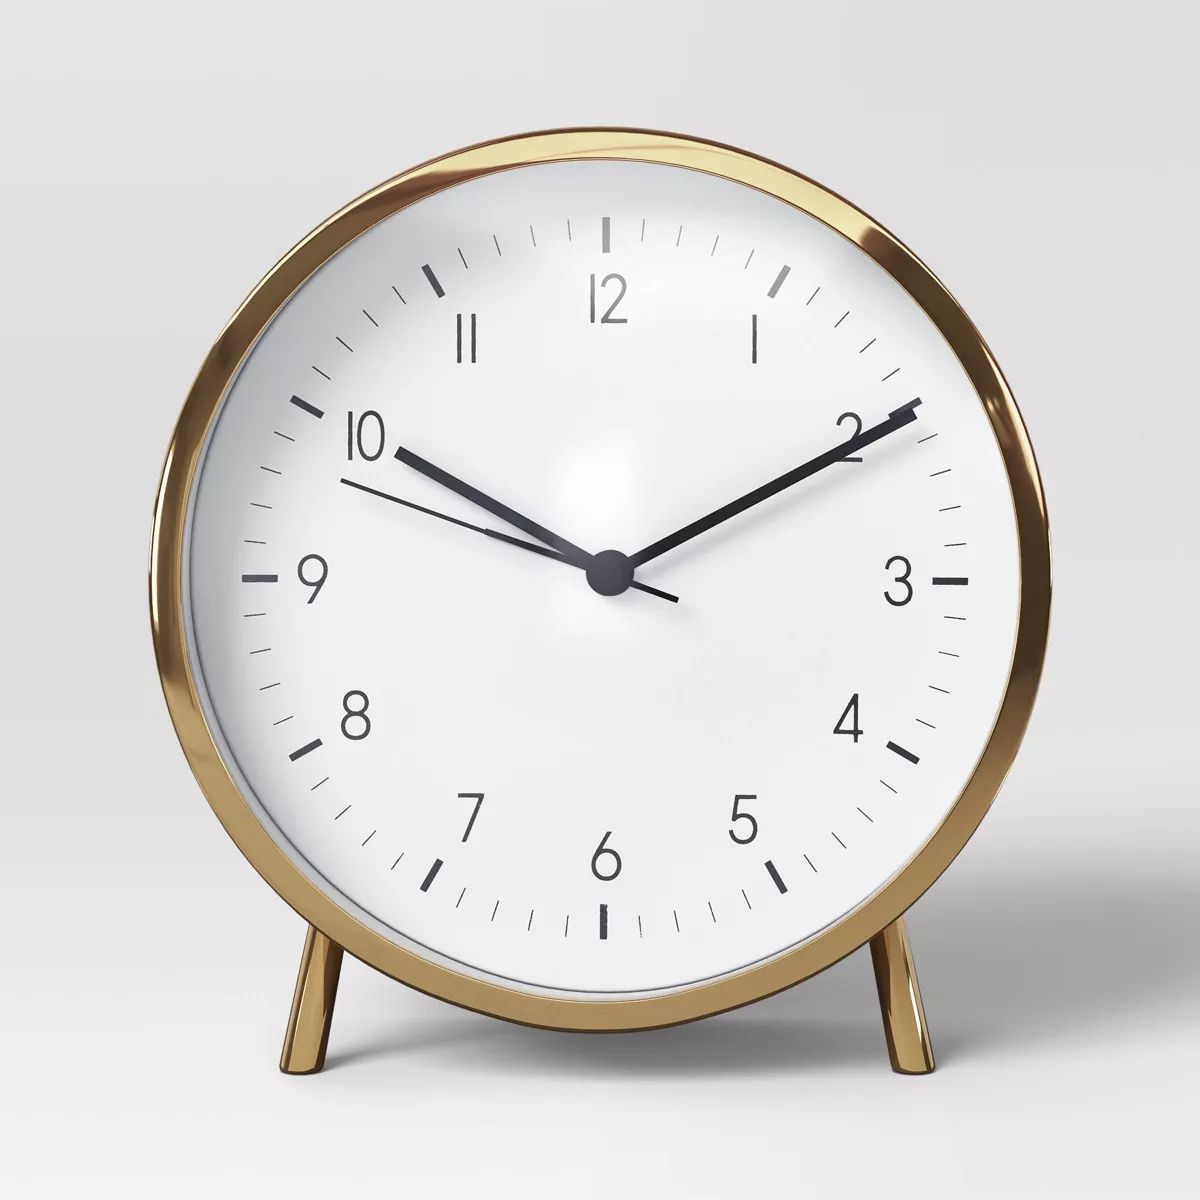 6" Polished Metal Mantle Clock with Alarm Brass - Threshold™ | Target